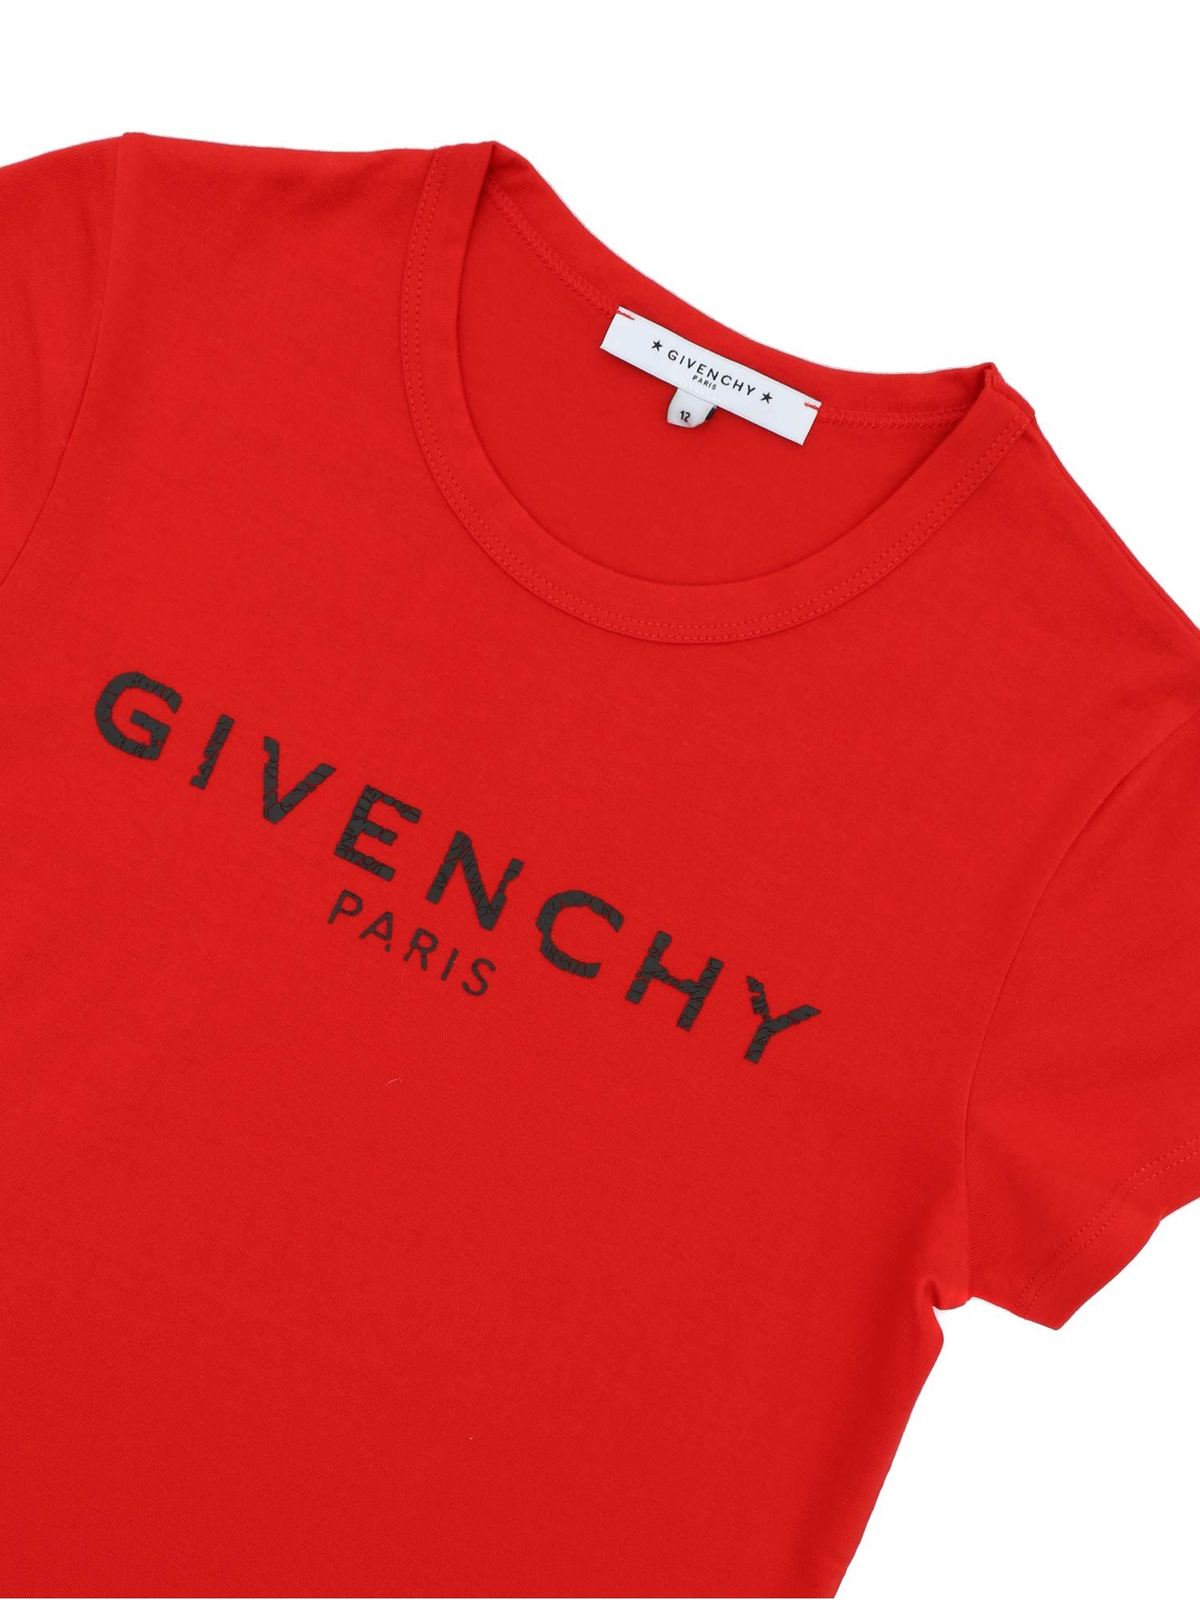 Givenchy - Camiseta - Rojo - Camisetas - H15F87991 | iKRIX tienda online